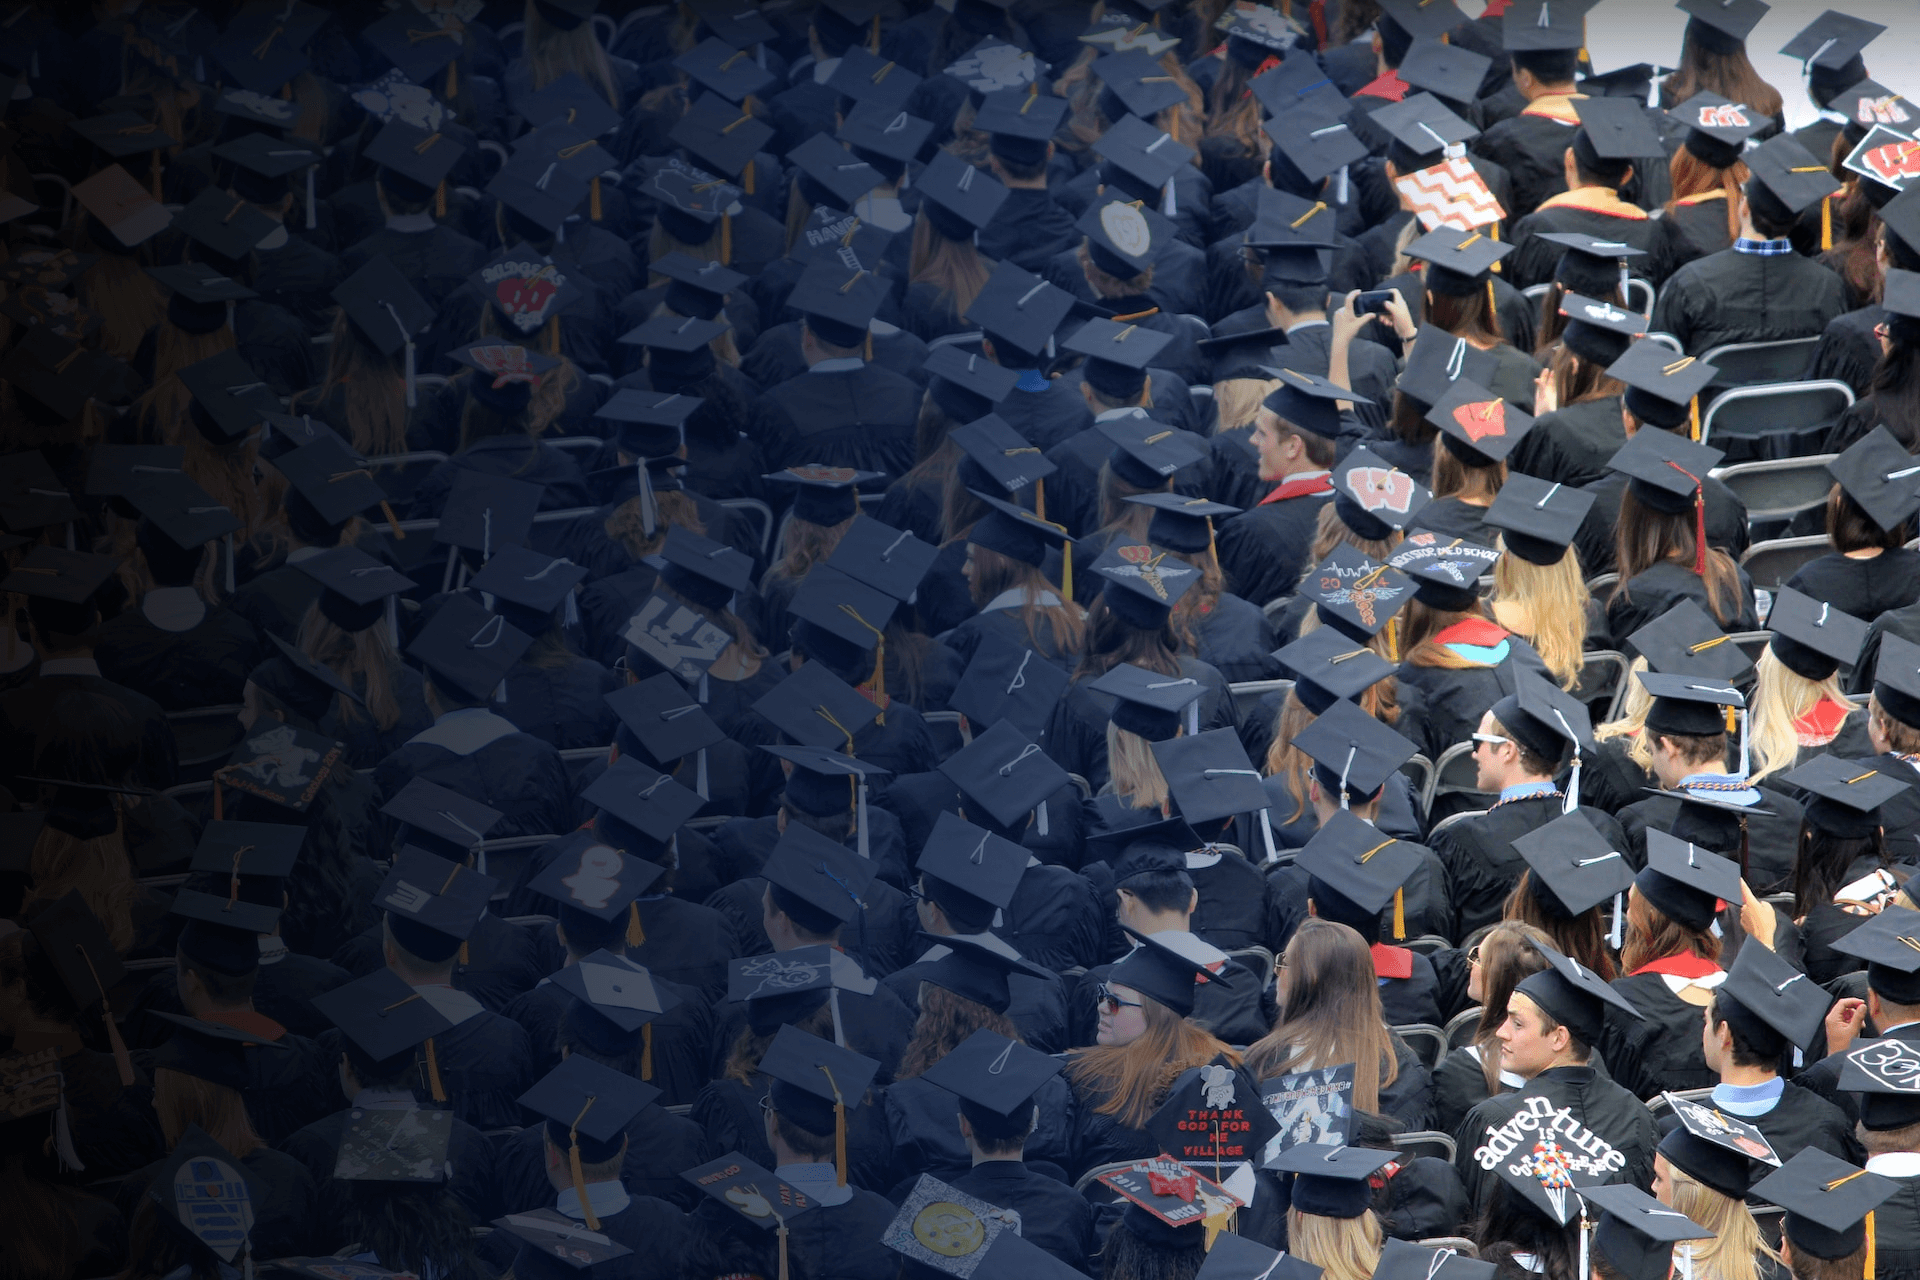 Graduation of students